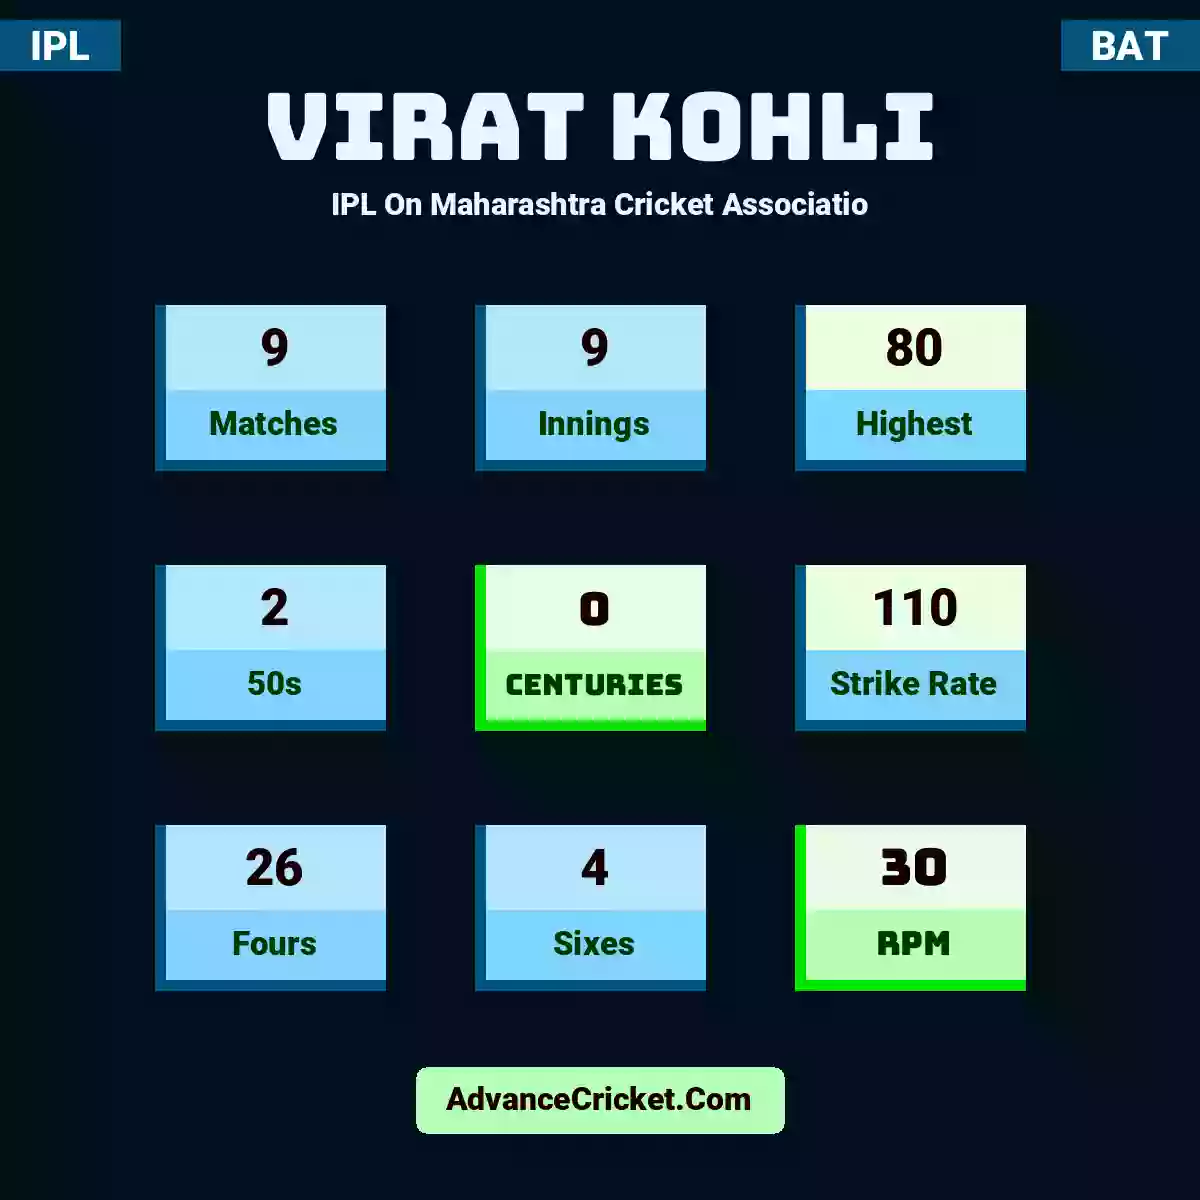 Virat Kohli IPL  On Maharashtra Cricket Associatio, Virat Kohli played 9 matches, scored 80 runs as highest, 2 half-centuries, and 0 centuries, with a strike rate of 110. V.Kohli hit 26 fours and 4 sixes, with an RPM of 30.